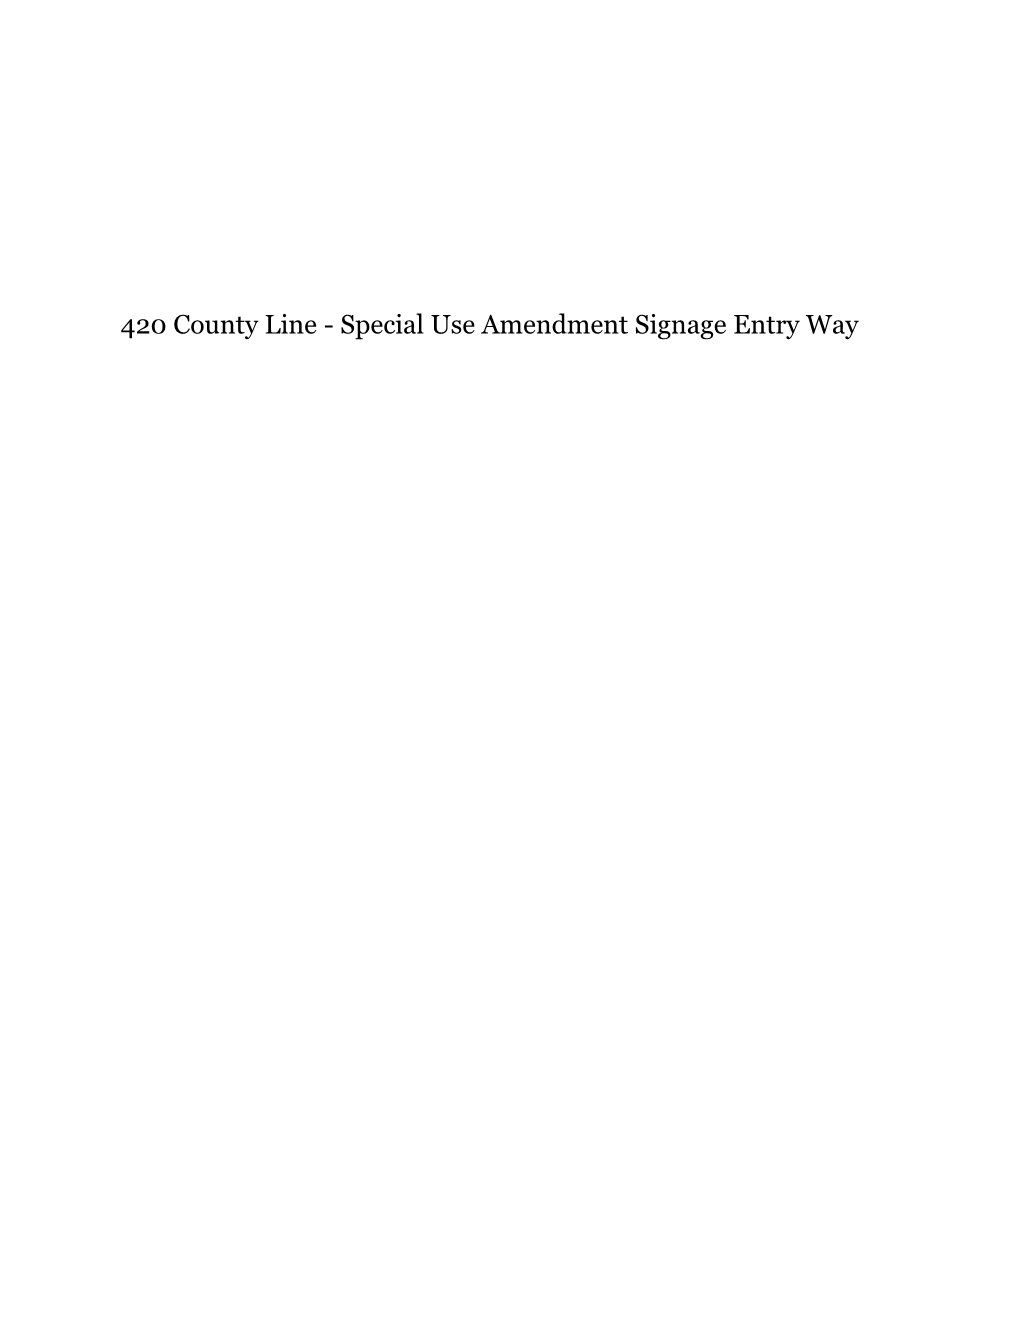 420 County Line - Special Use Amendment Signage Entry Way Presídent MARTIN J